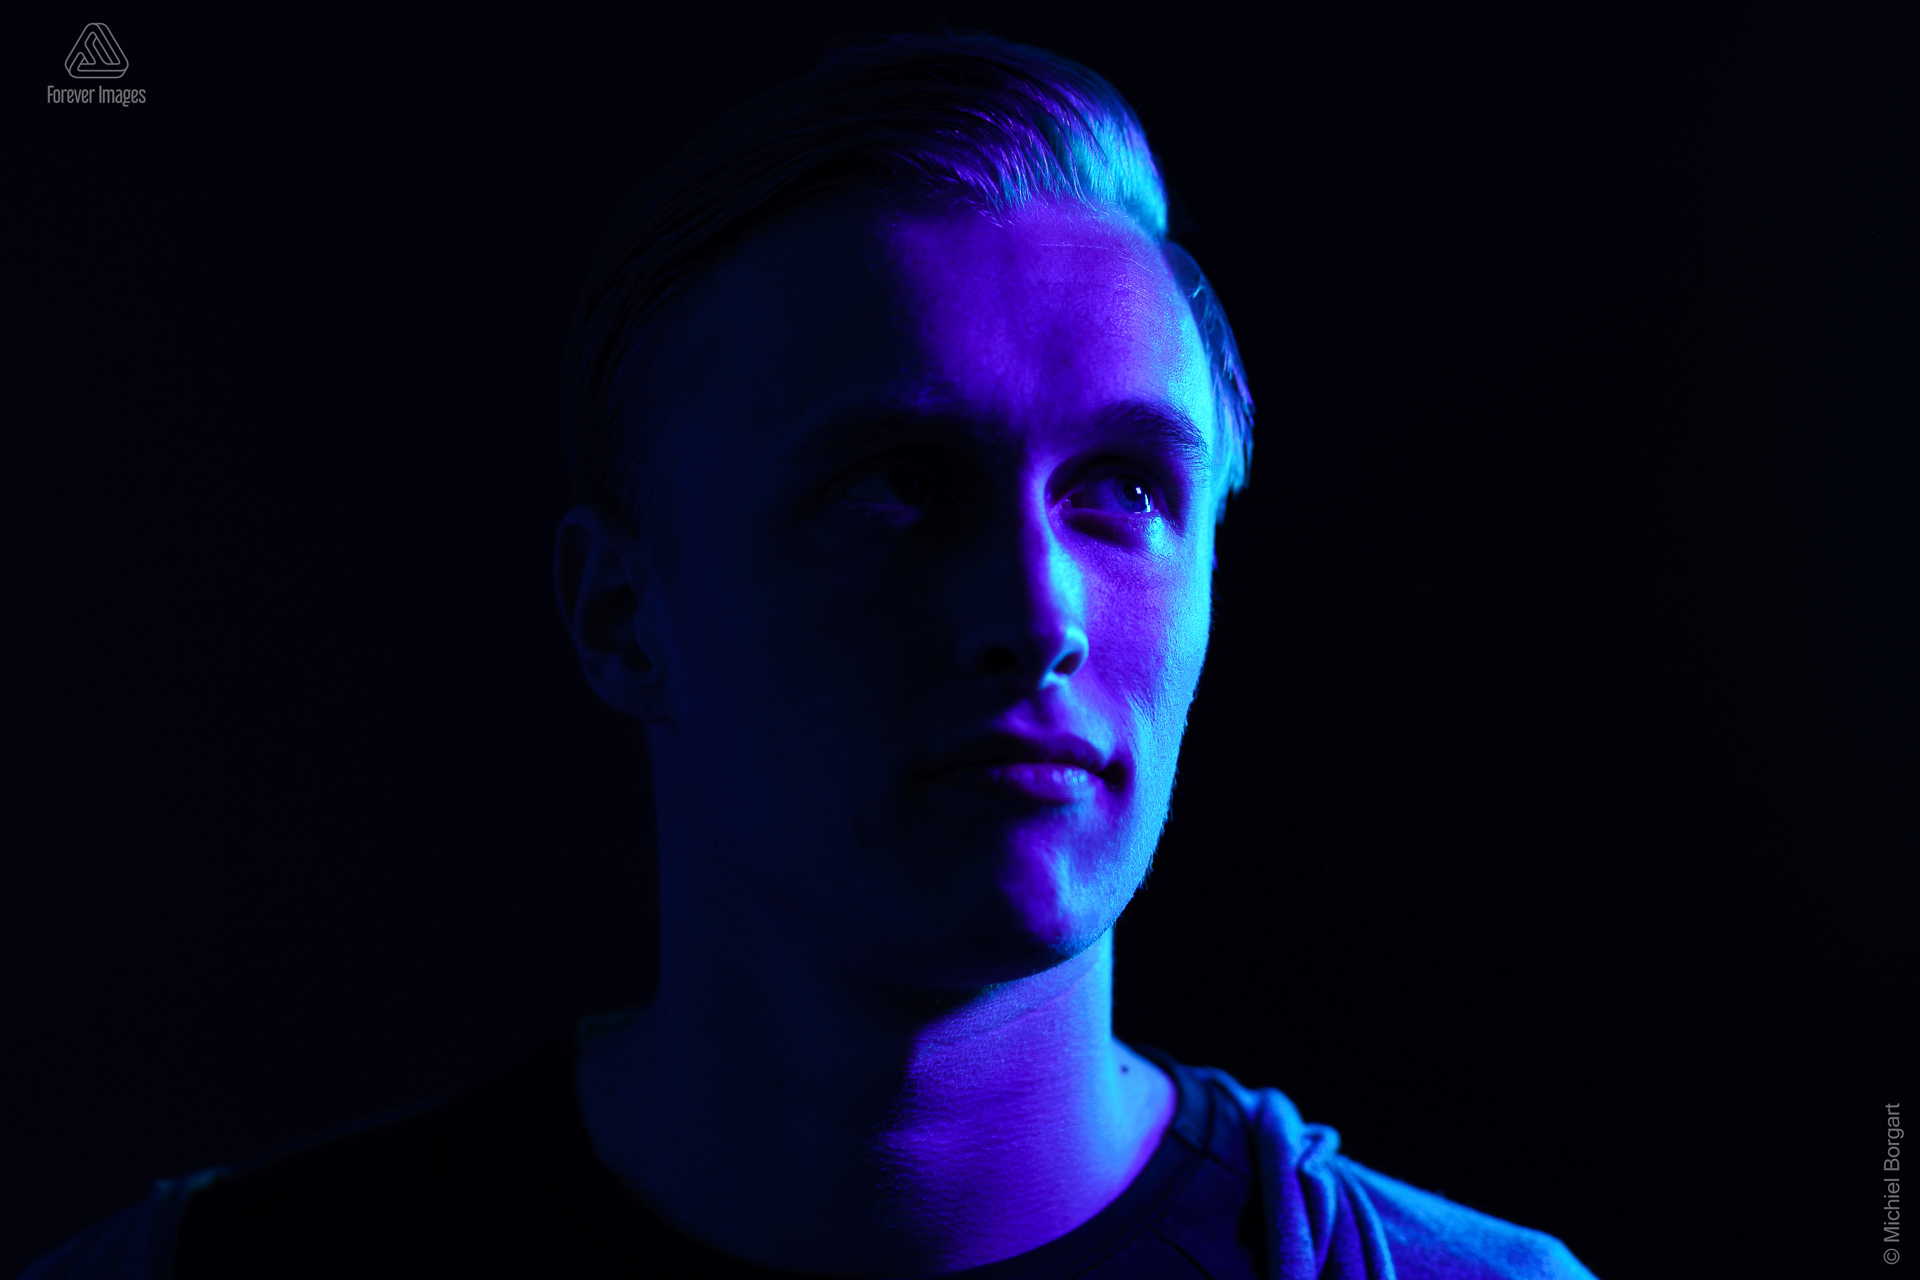 Portretfoto low key jonge man in studio met blauw en paars licht | Alex | Portretfotograaf Michiel Borgart - Forever Images.